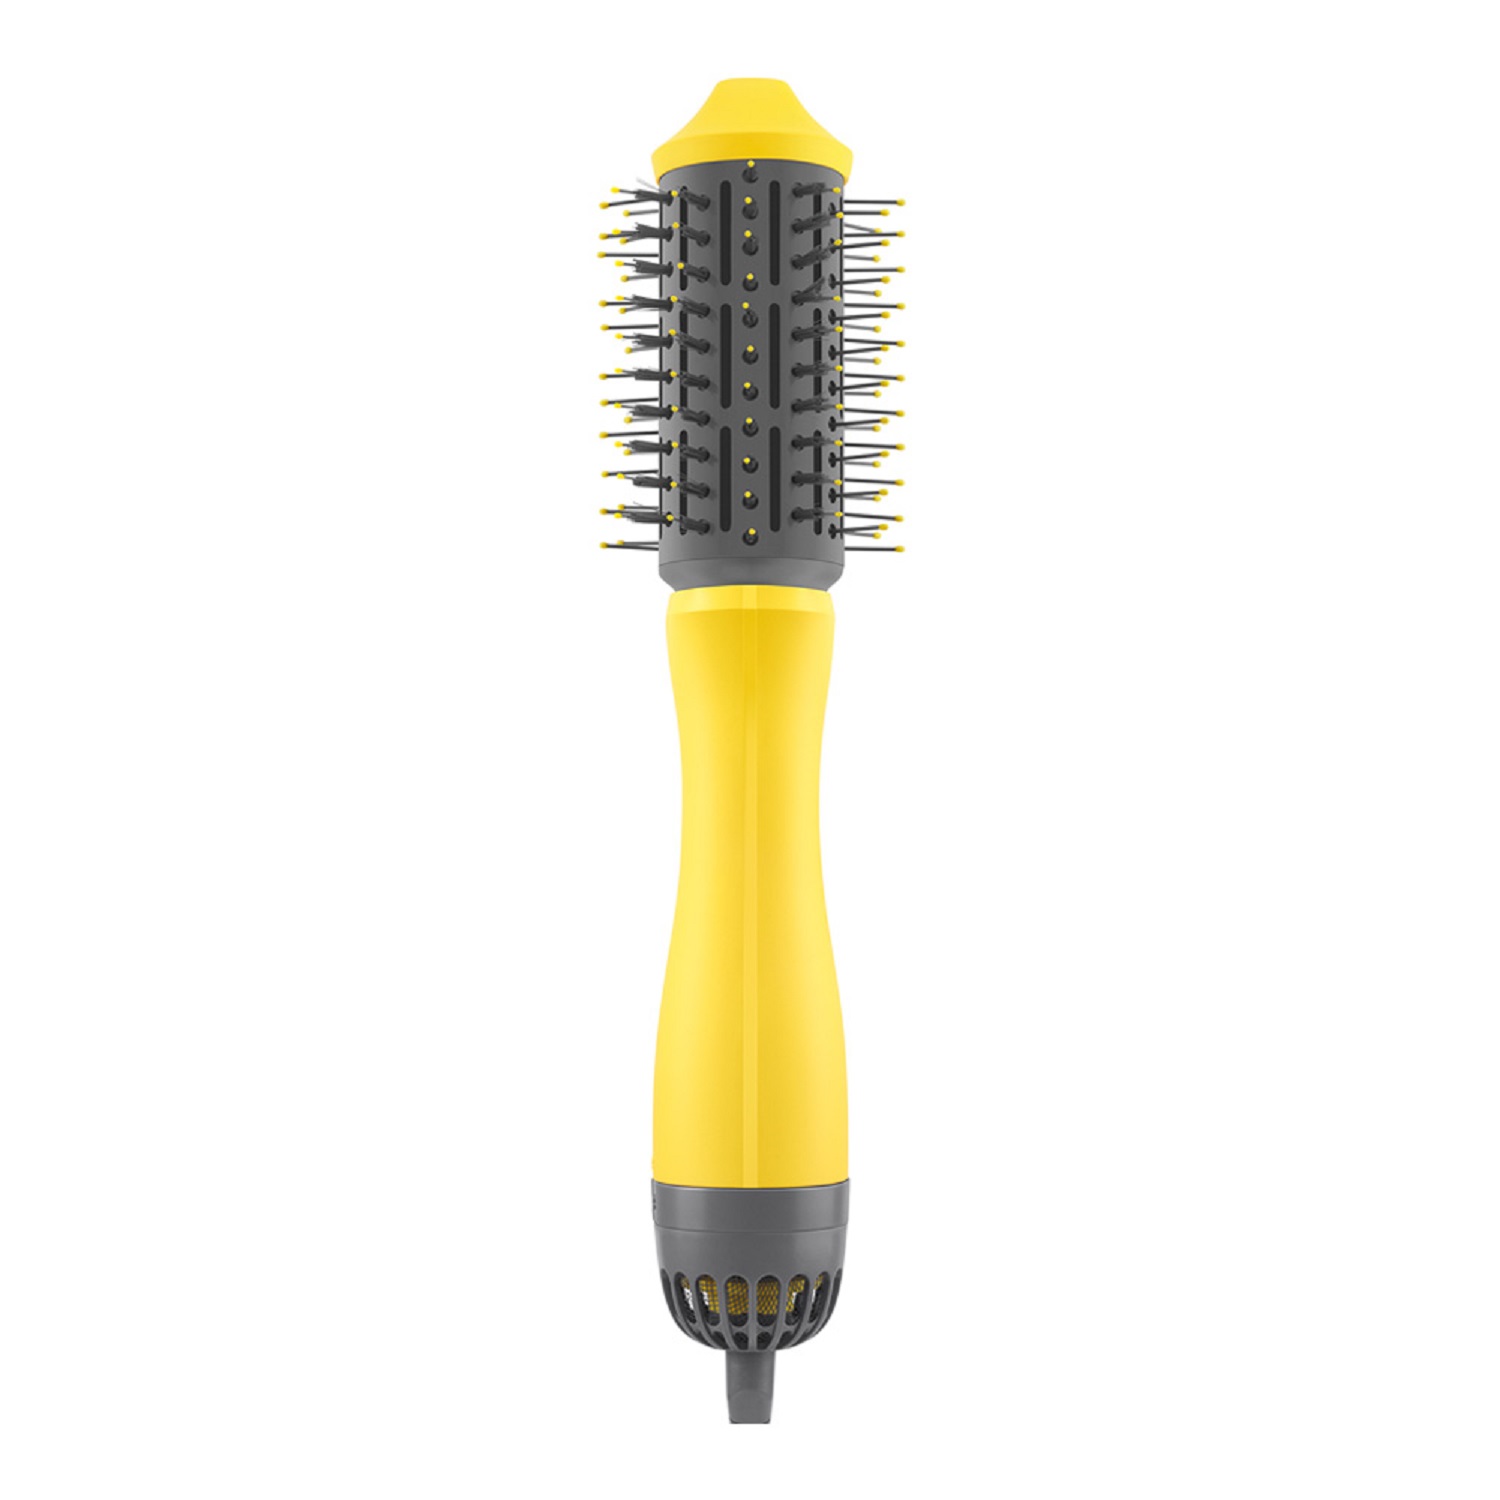 the single shot blow dryer brush (cepillo secador)